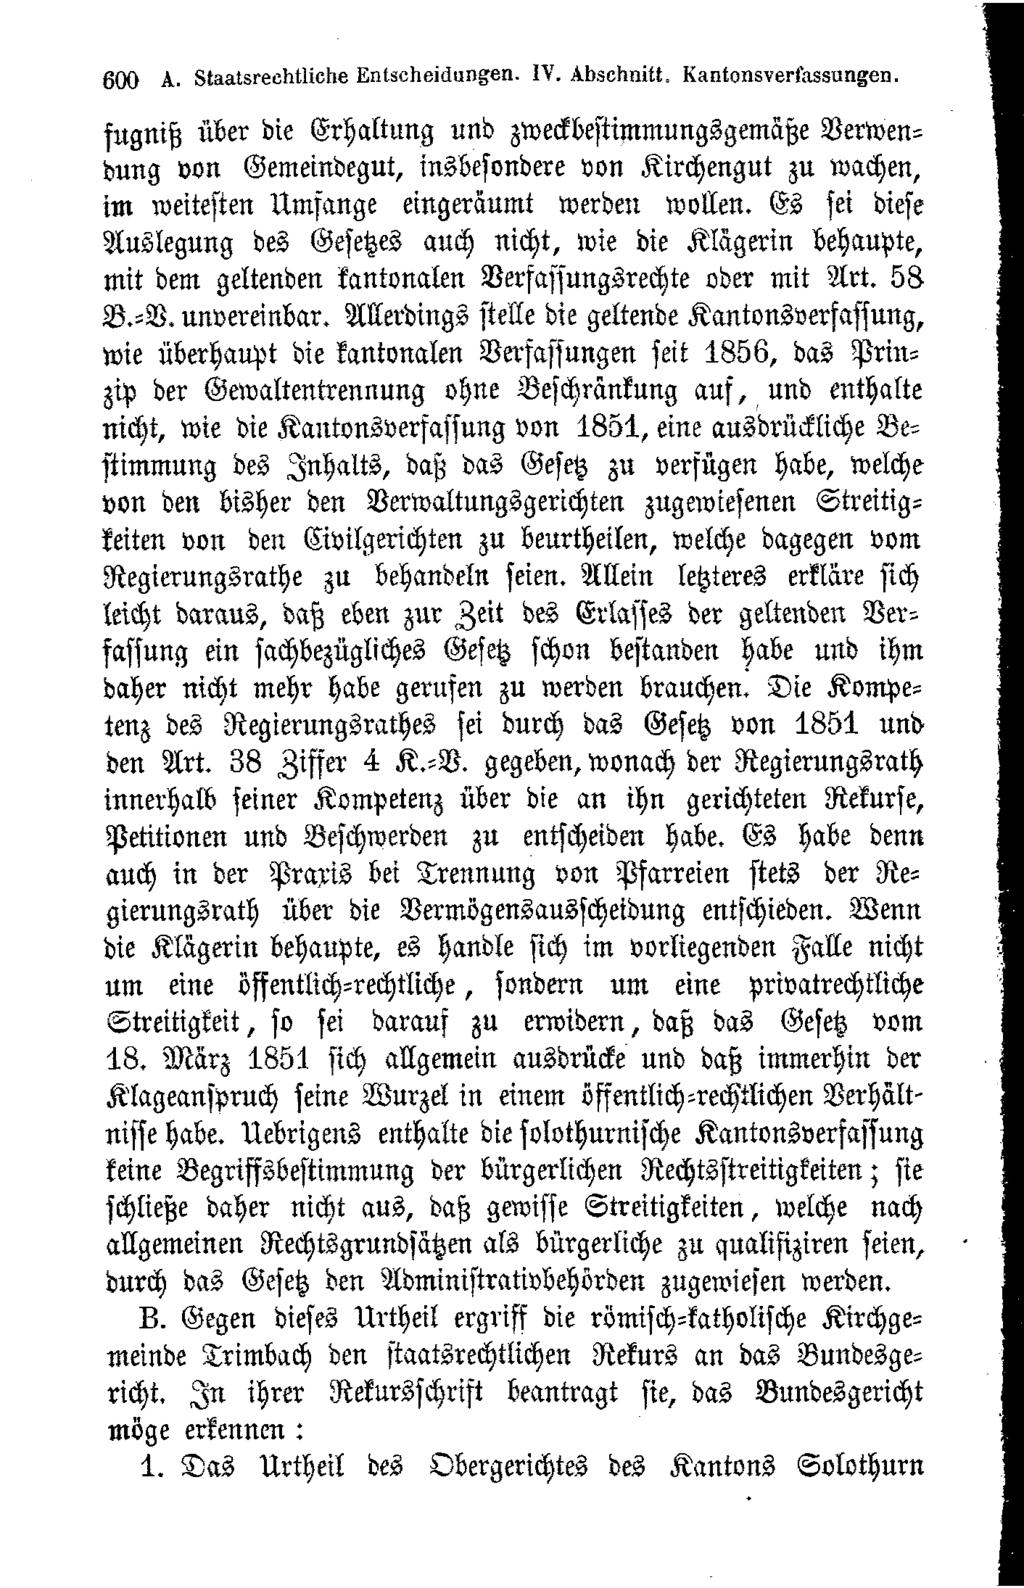 600 A. Staatsrechtliche Entscheidungen. IV. Abschnitt. Kantonsverfassungen.